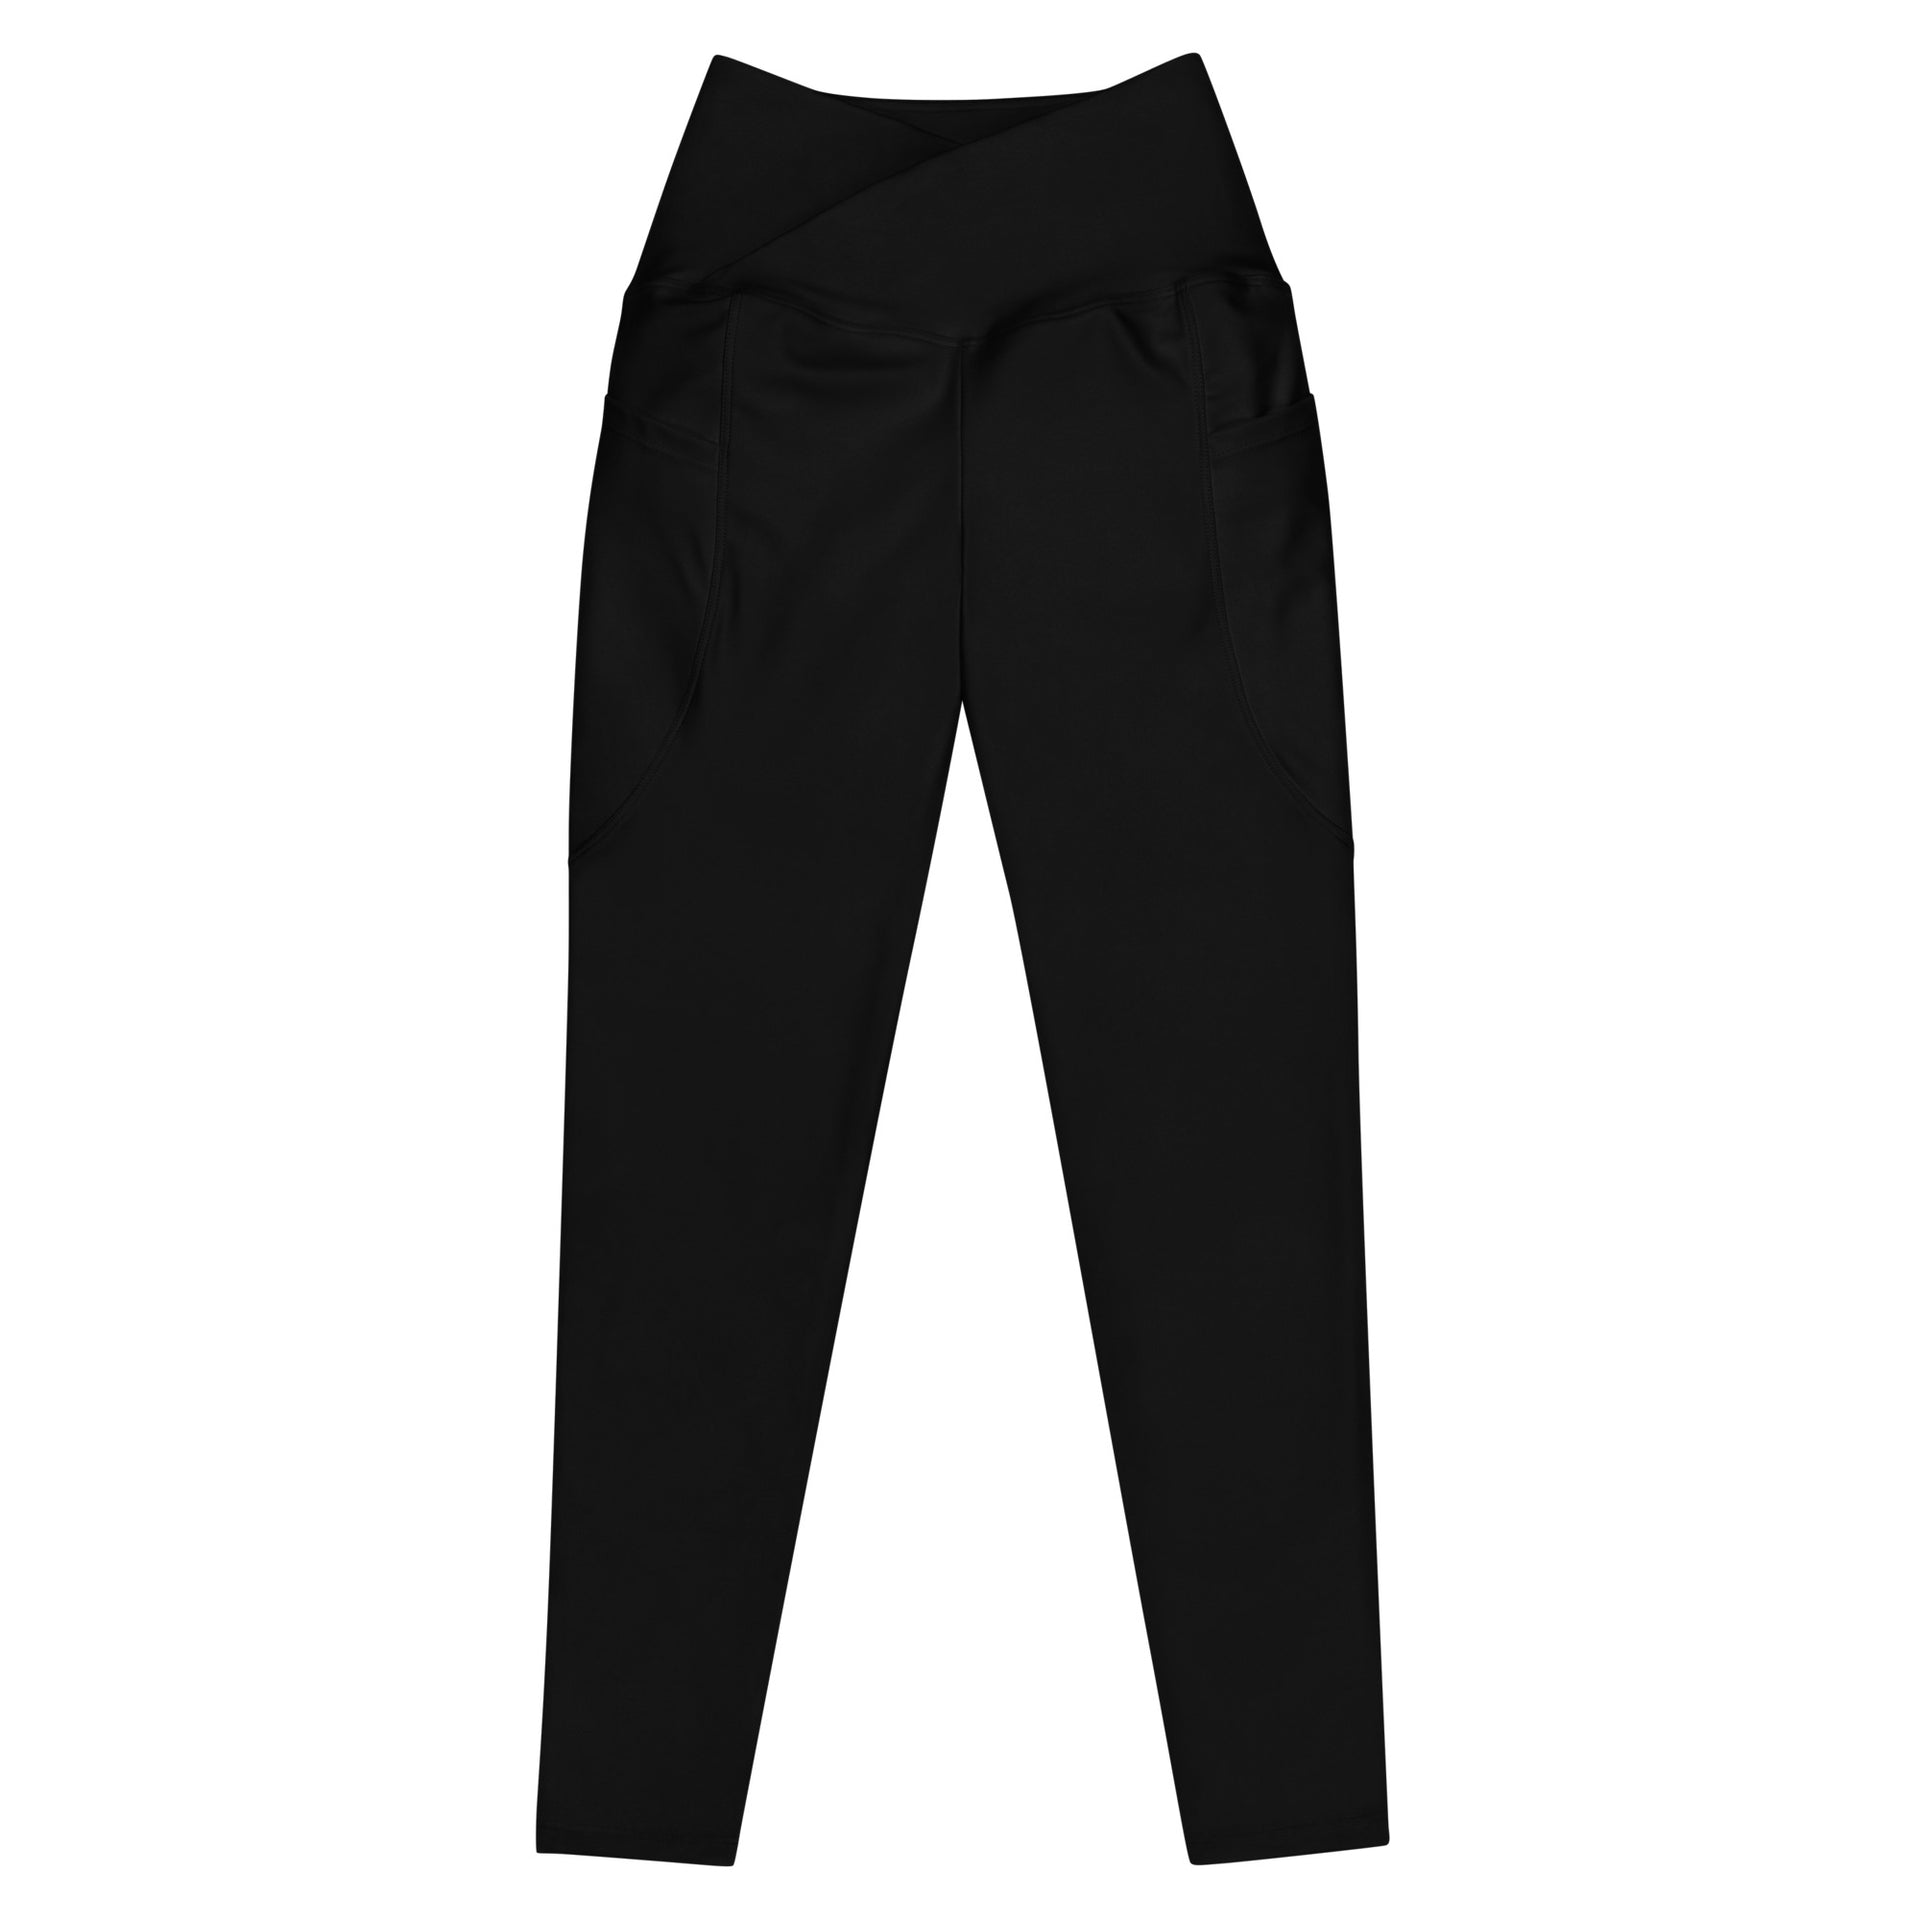 Crossover leggings with pockets – willetspen